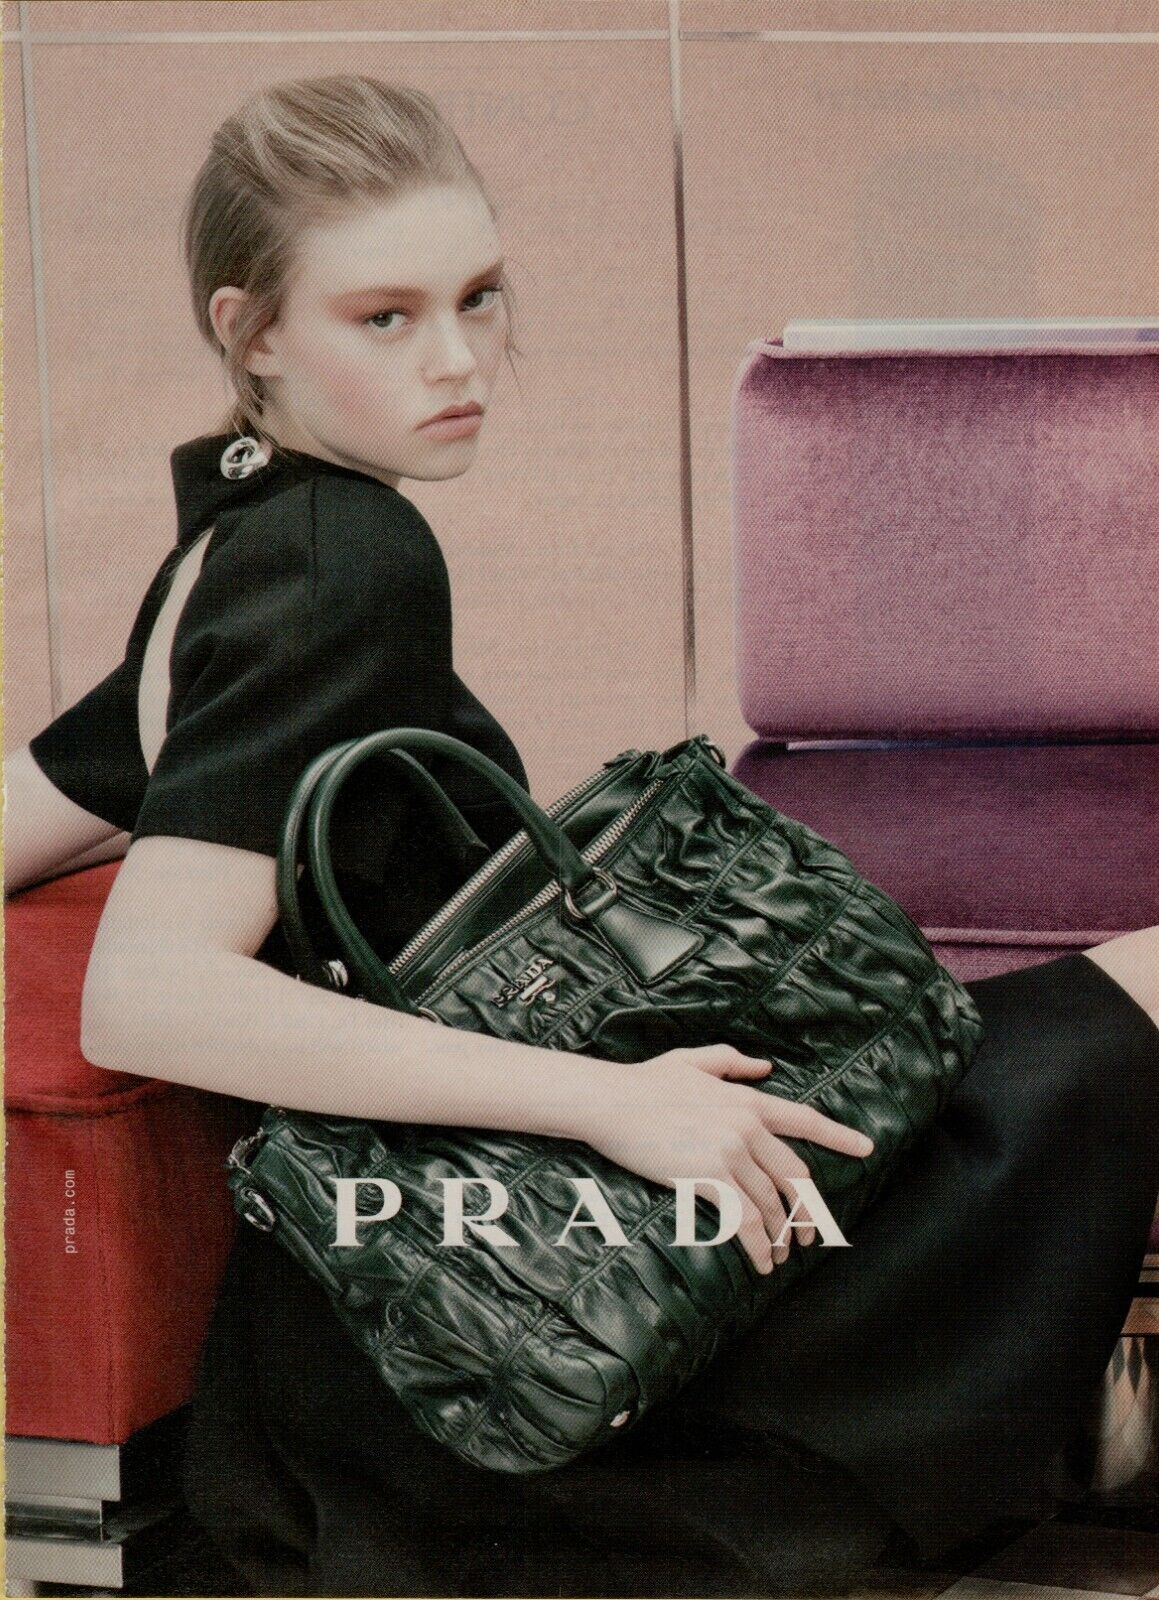 2012 Prada Black Bag Dress Blonde Model Fashion Photo Vintage Print Ad